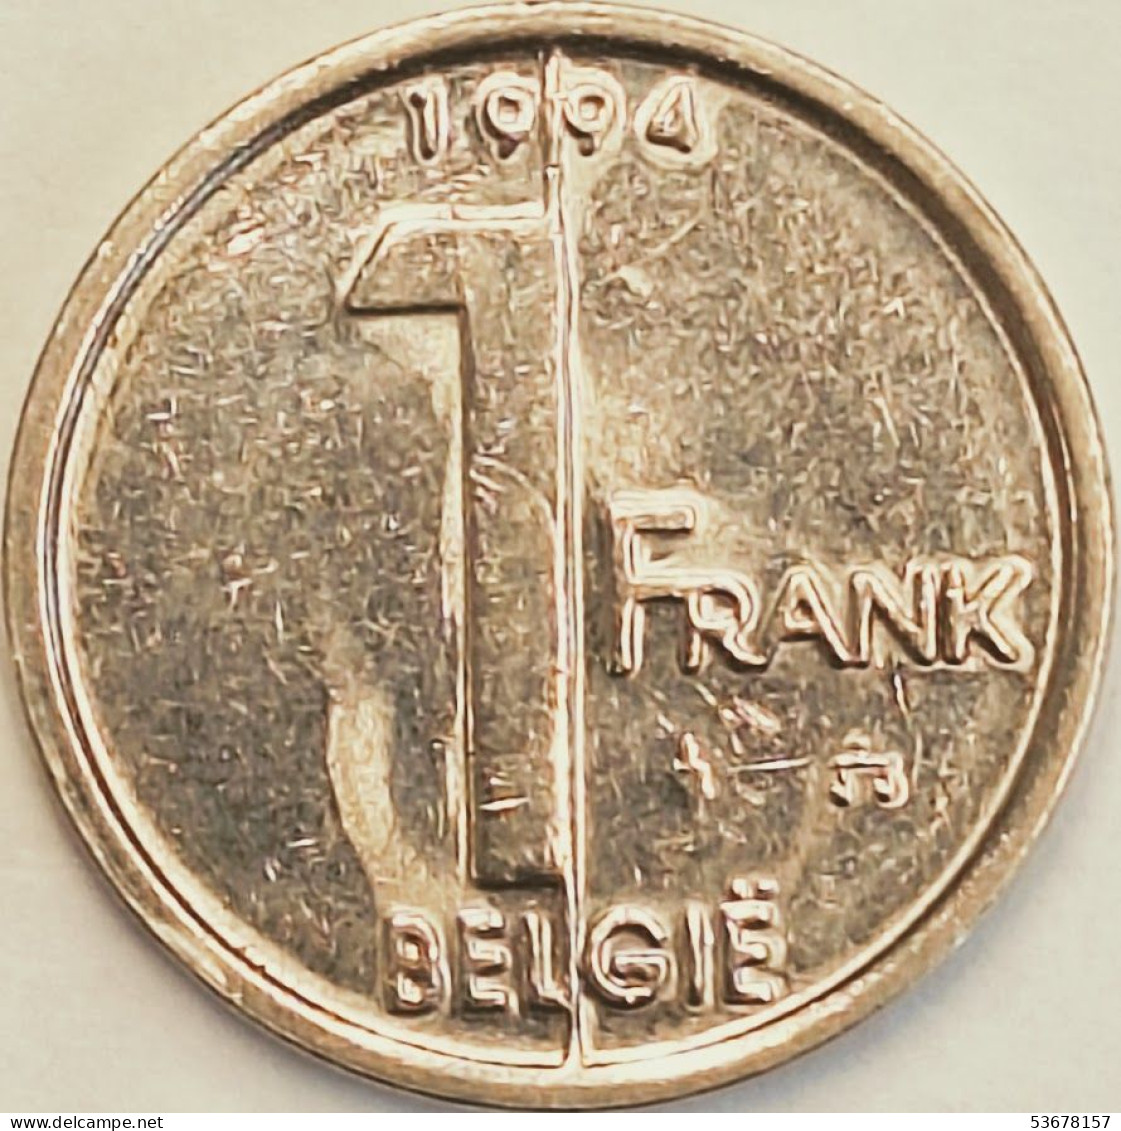 Belgium - Franc 1994, KM# 188 (#3149) - 1 Franc